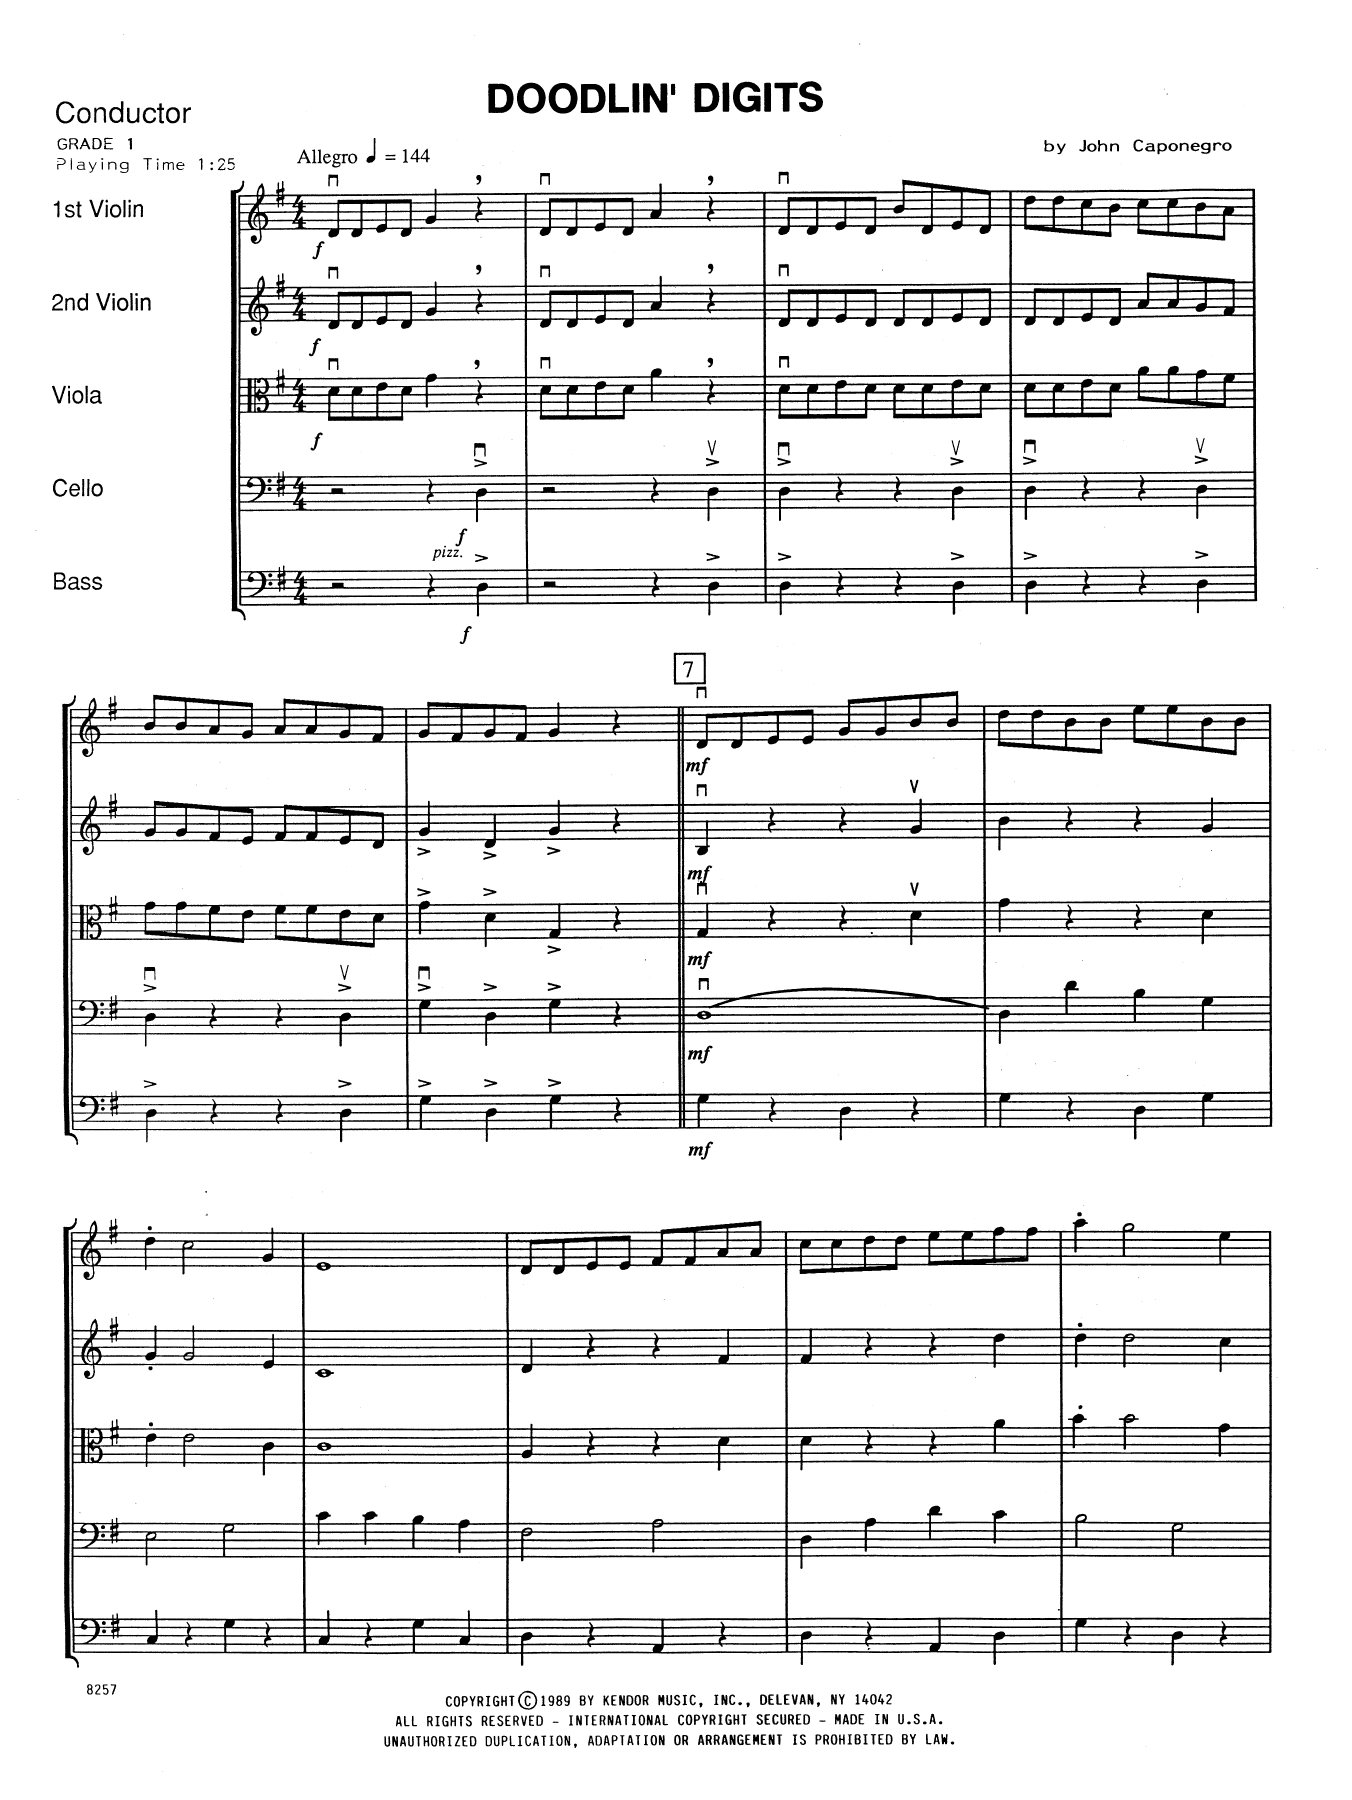 Download John Caponegro Doodlin' Digits - Full Score Sheet Music